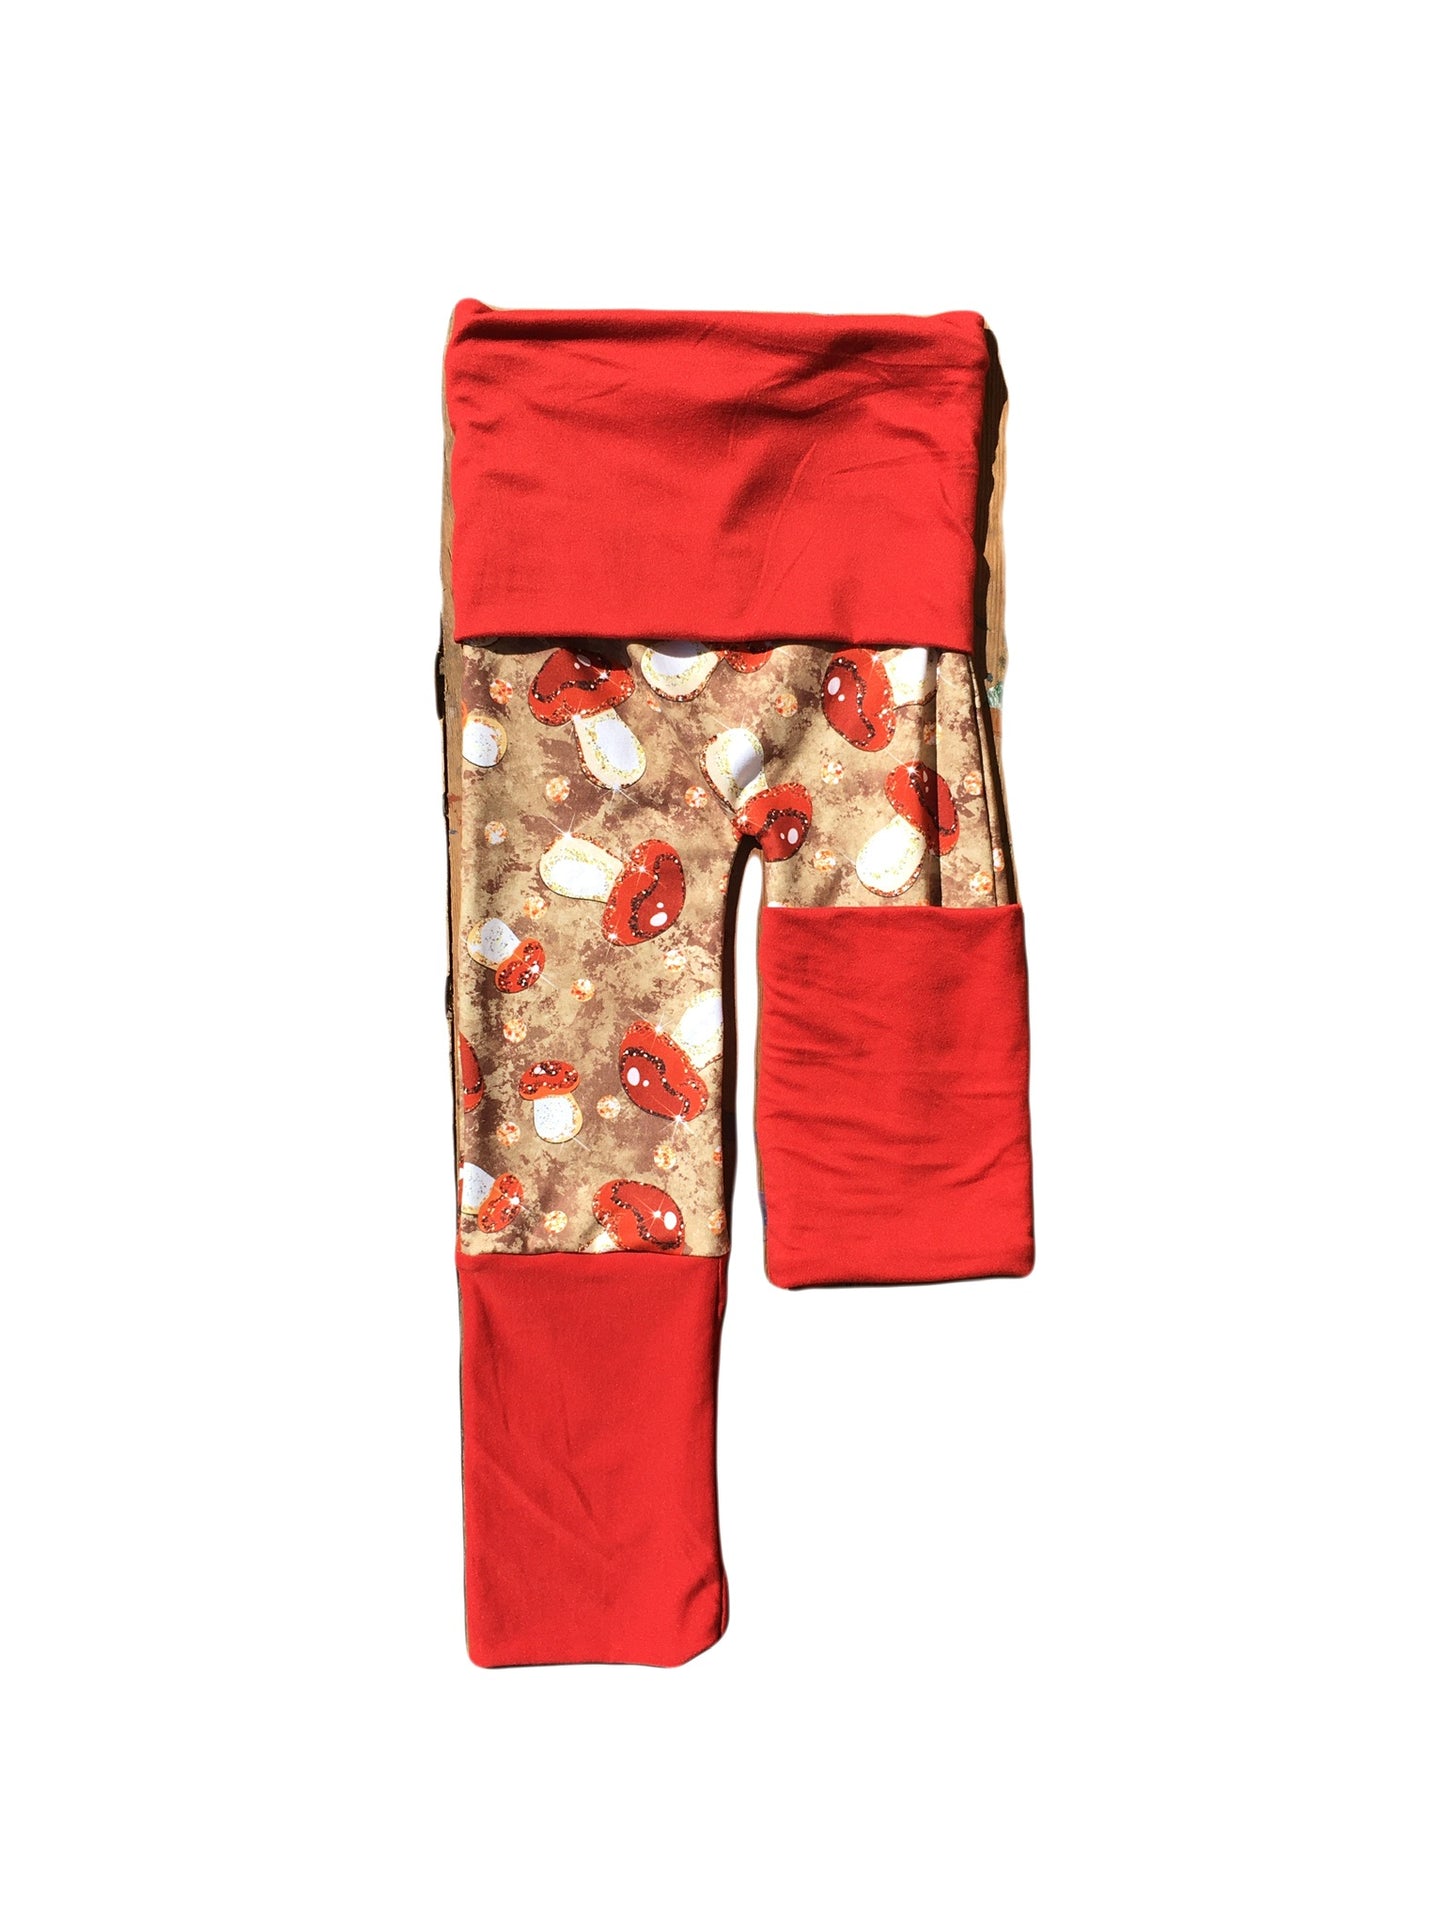 Adjustable Pants - Amanitas with Red